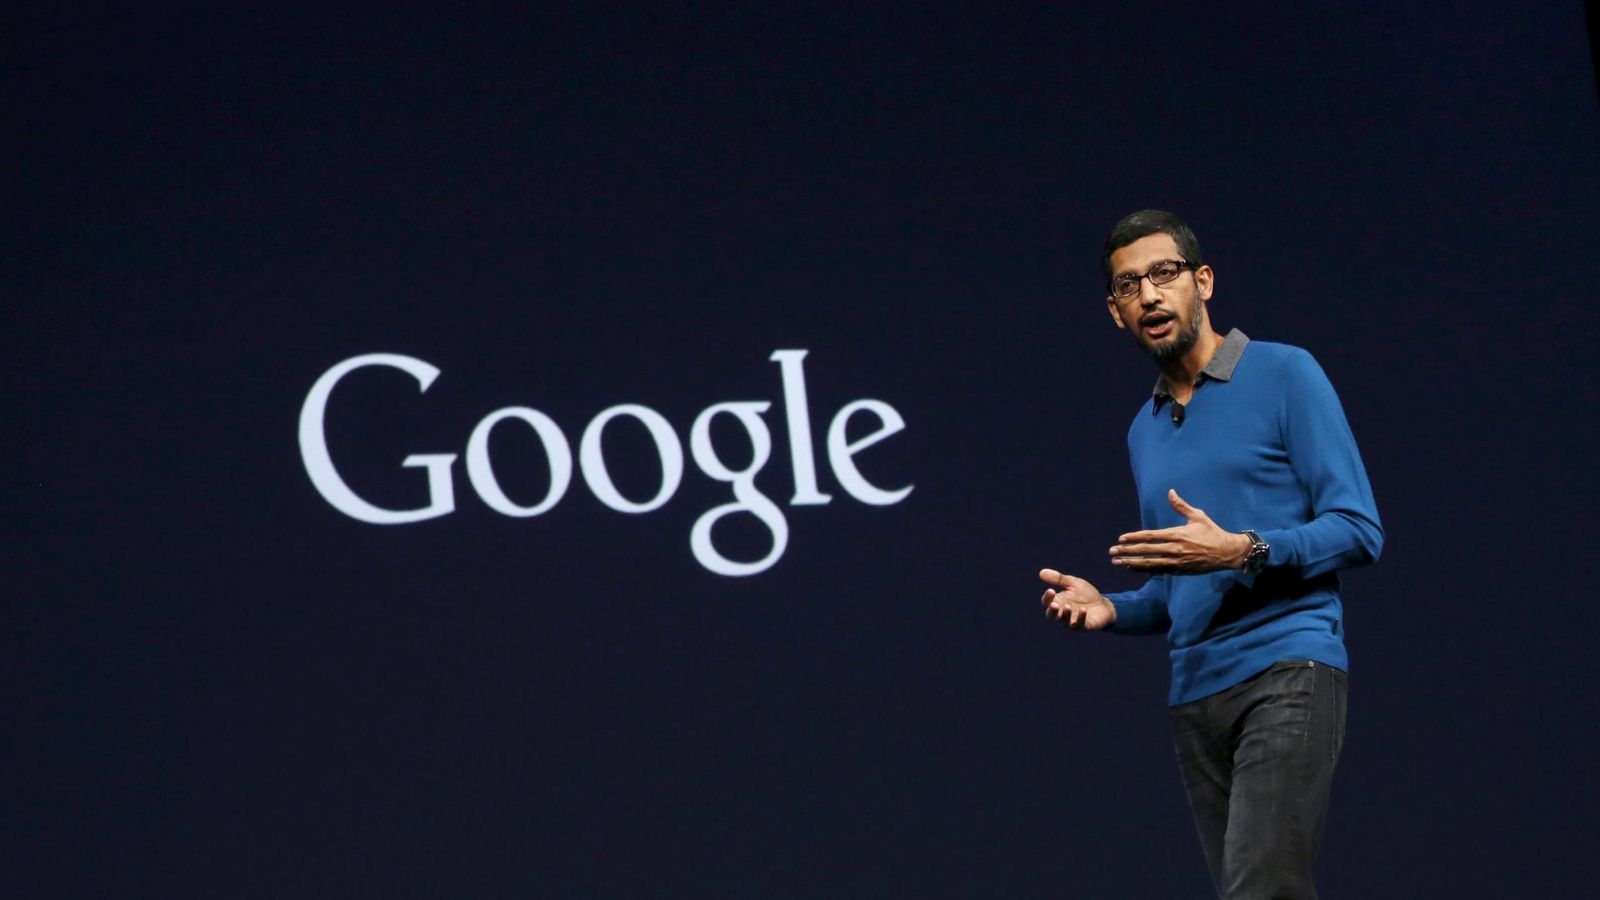 Foto: Sundar pichai, vicepresidente de productos de Google